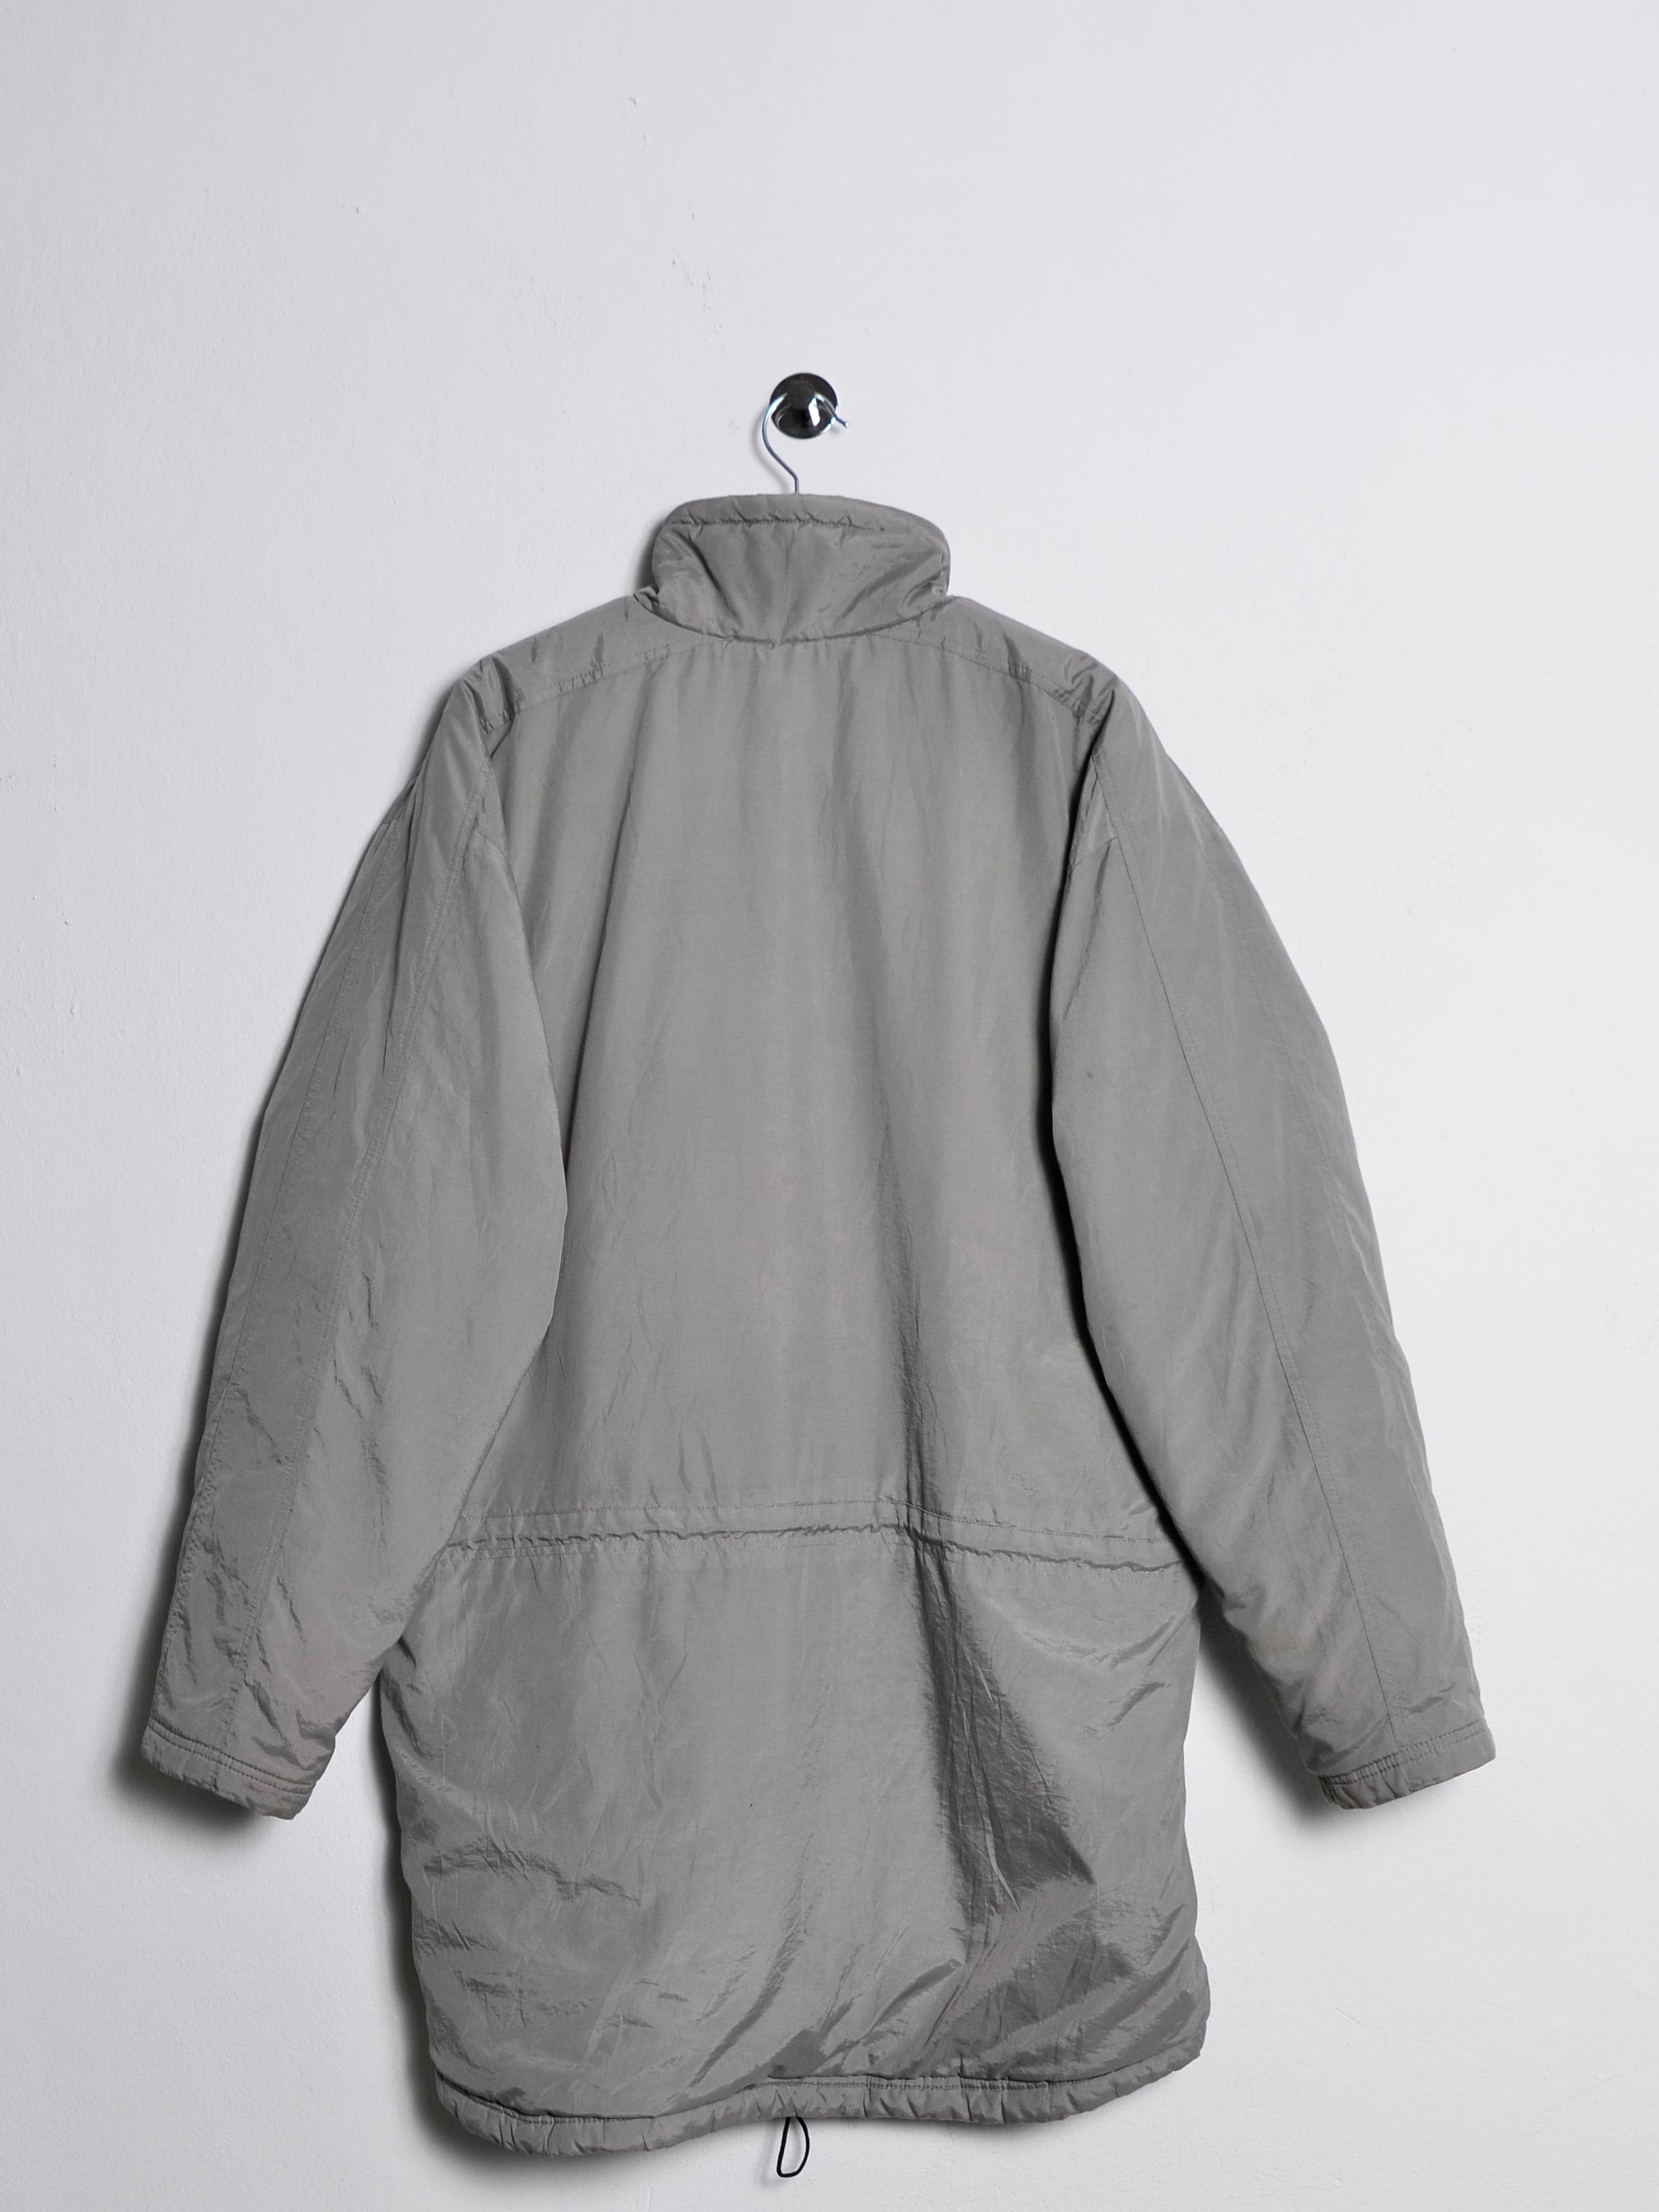 Nike Embroidered Swoosh Jacket Grey // Medium - RHAGHOUSE VINTAGE